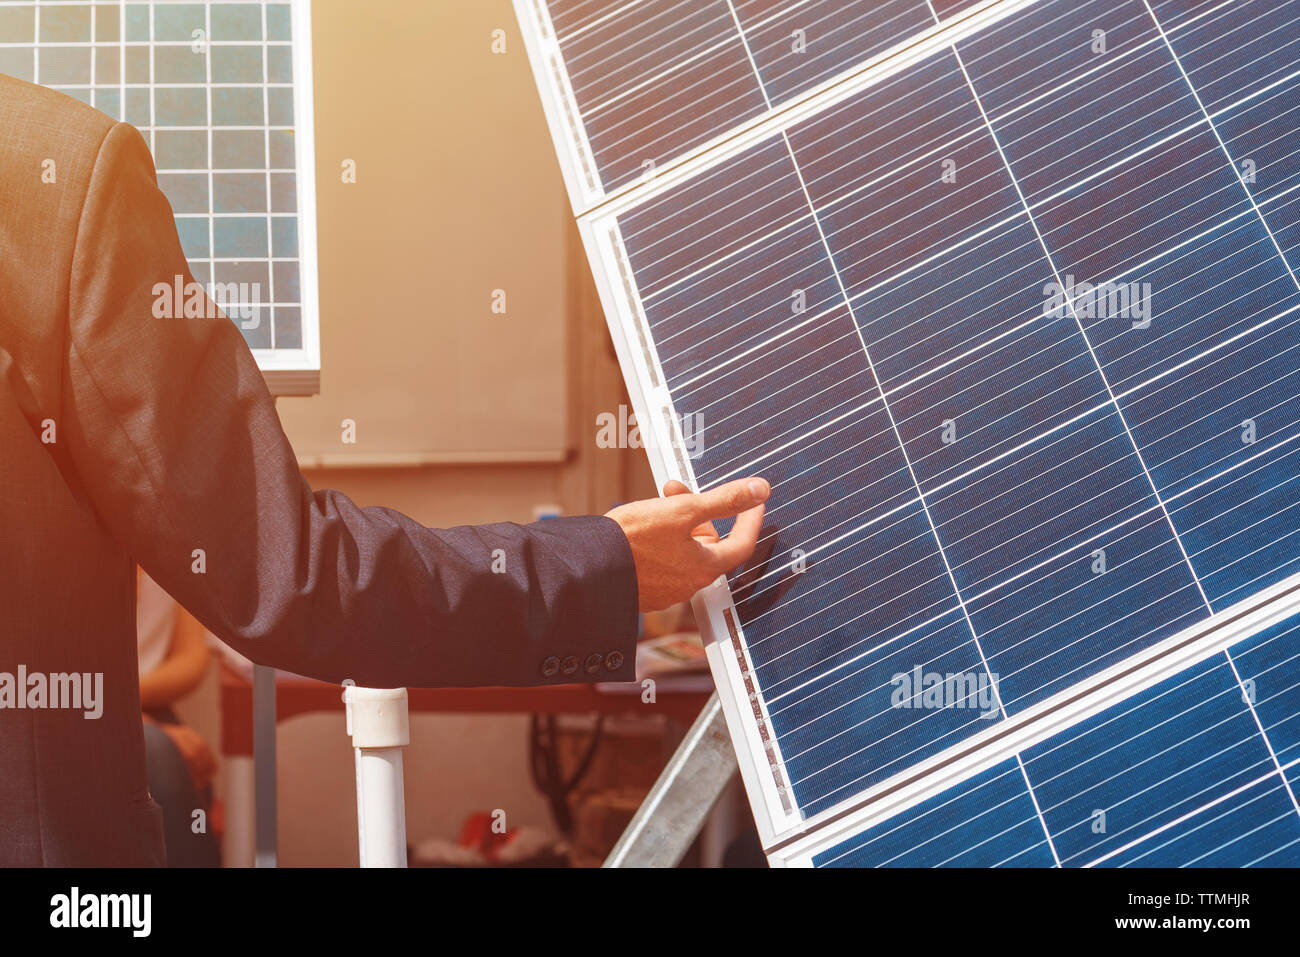 Photovoltaic solar panel business presentation, businessman talking about renewable energy source exploitation Stock Photo